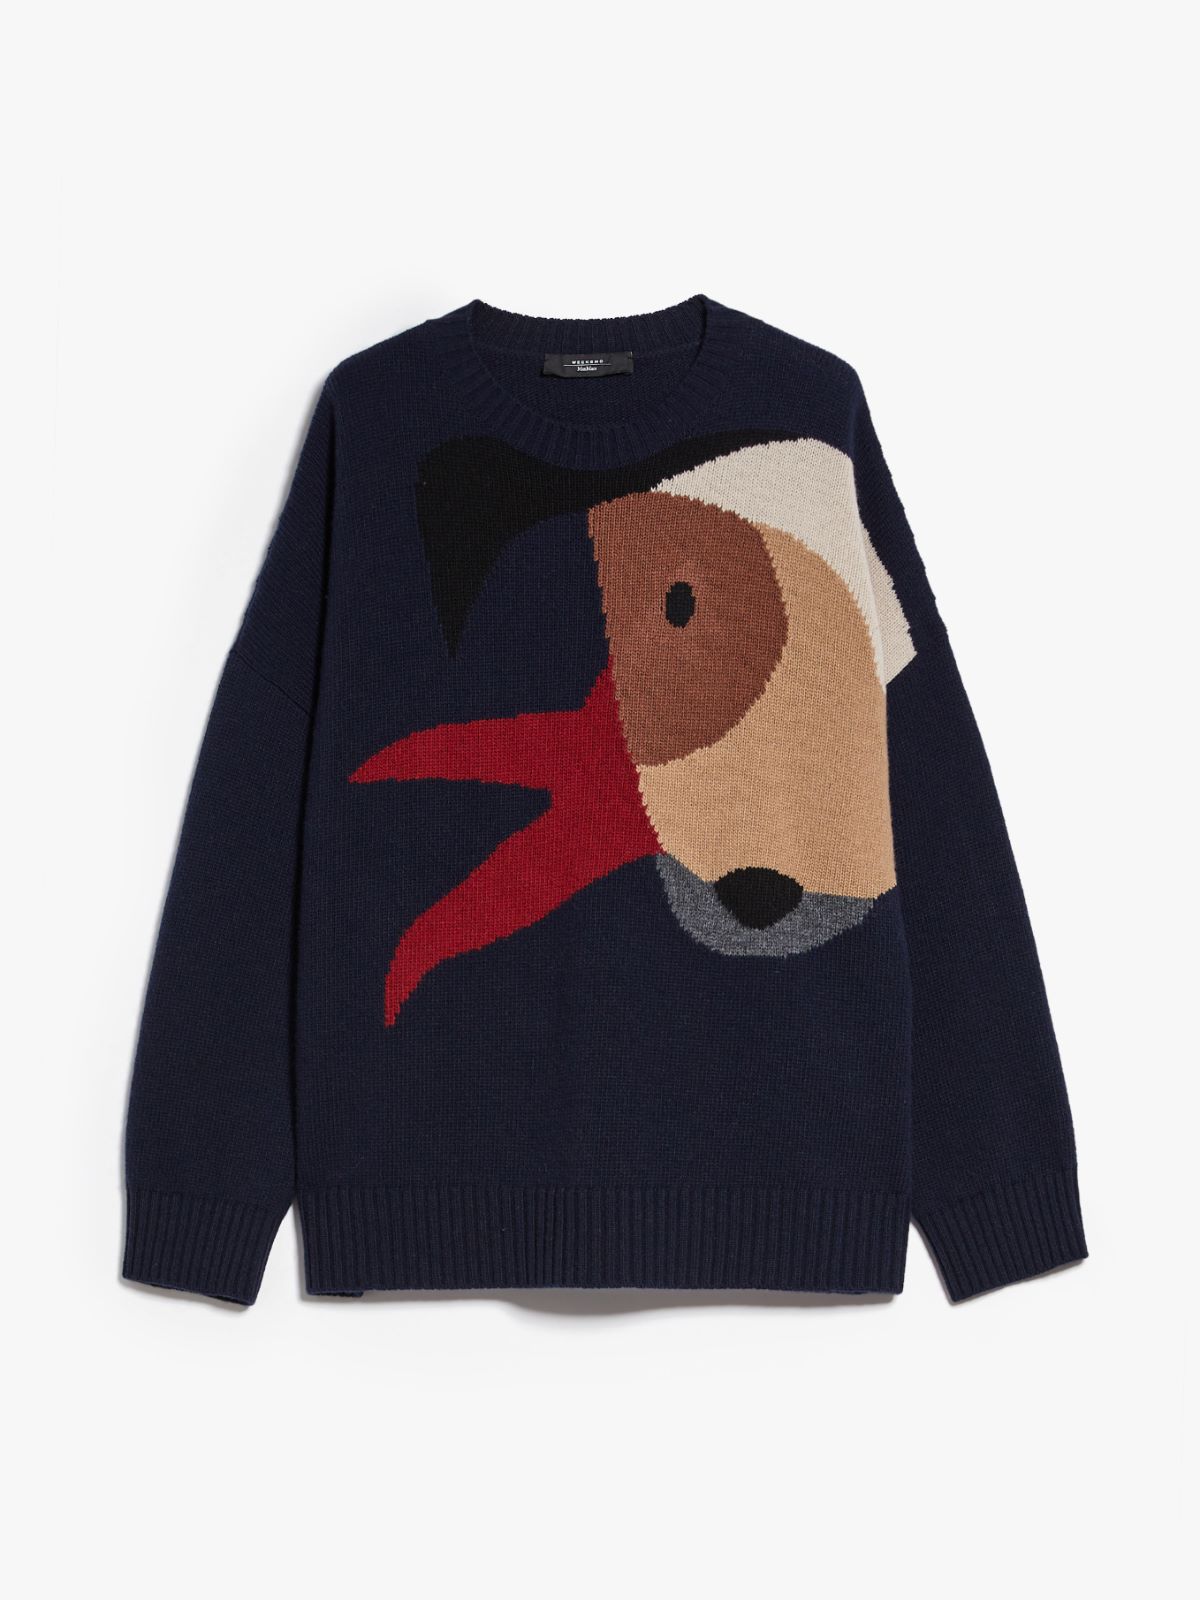 Wool yarn sweater - MULTICOLOUR - Weekend Max Mara - 6